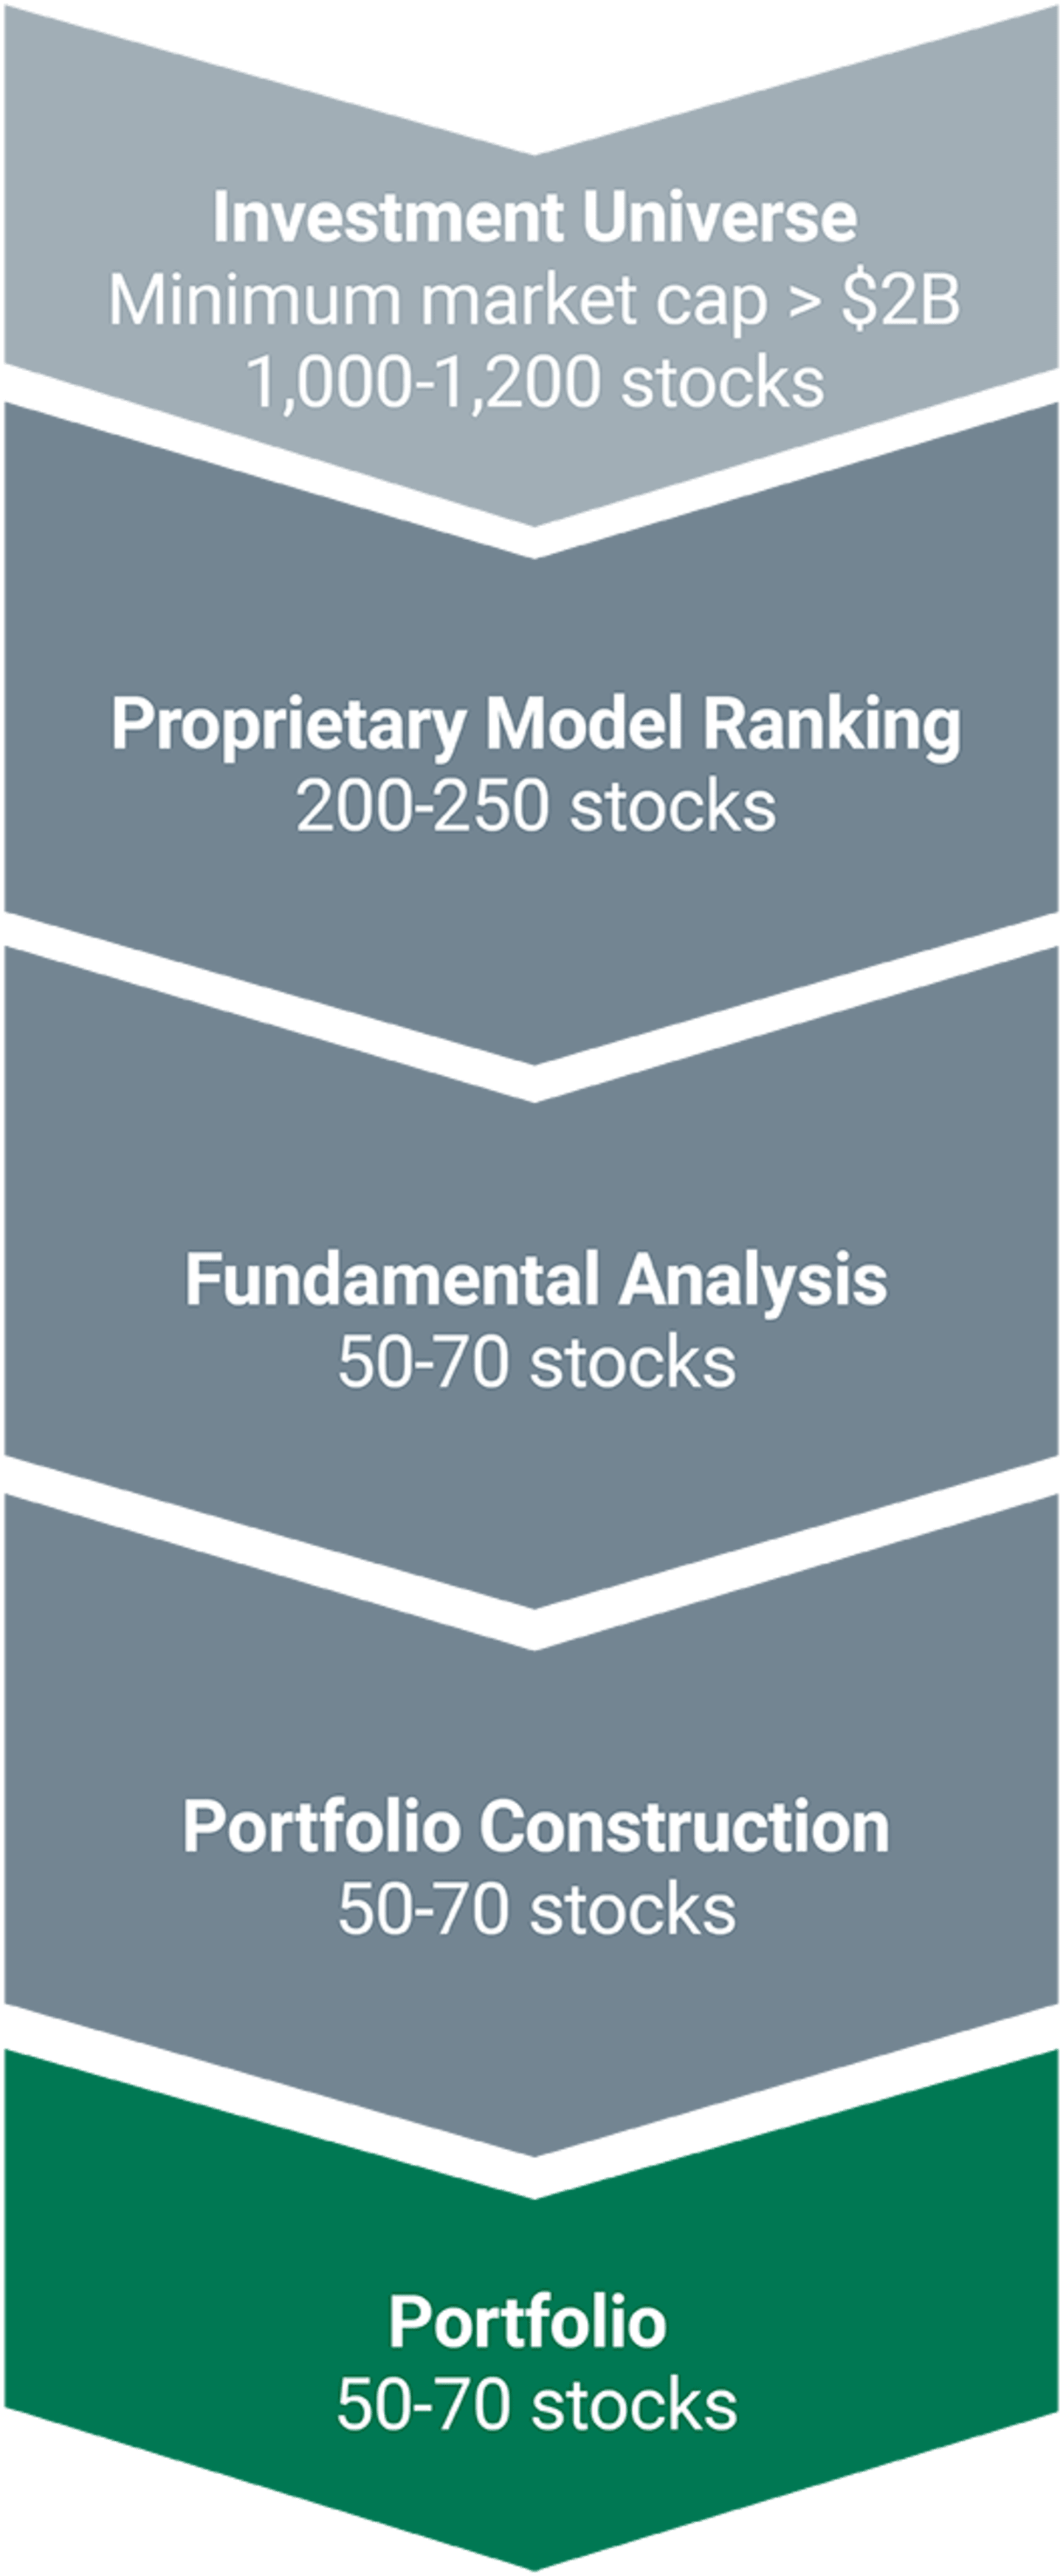 Investment Universe: Minimum market cap >$2B, 1,000-1,200 stocks. Proprietary Model Ranking: 200-250 stocks. Fundamental Analysis: 50-70 stocks. Portfolio Construction: 50-70 stocks. Portfolio: 50-70 stocks. 